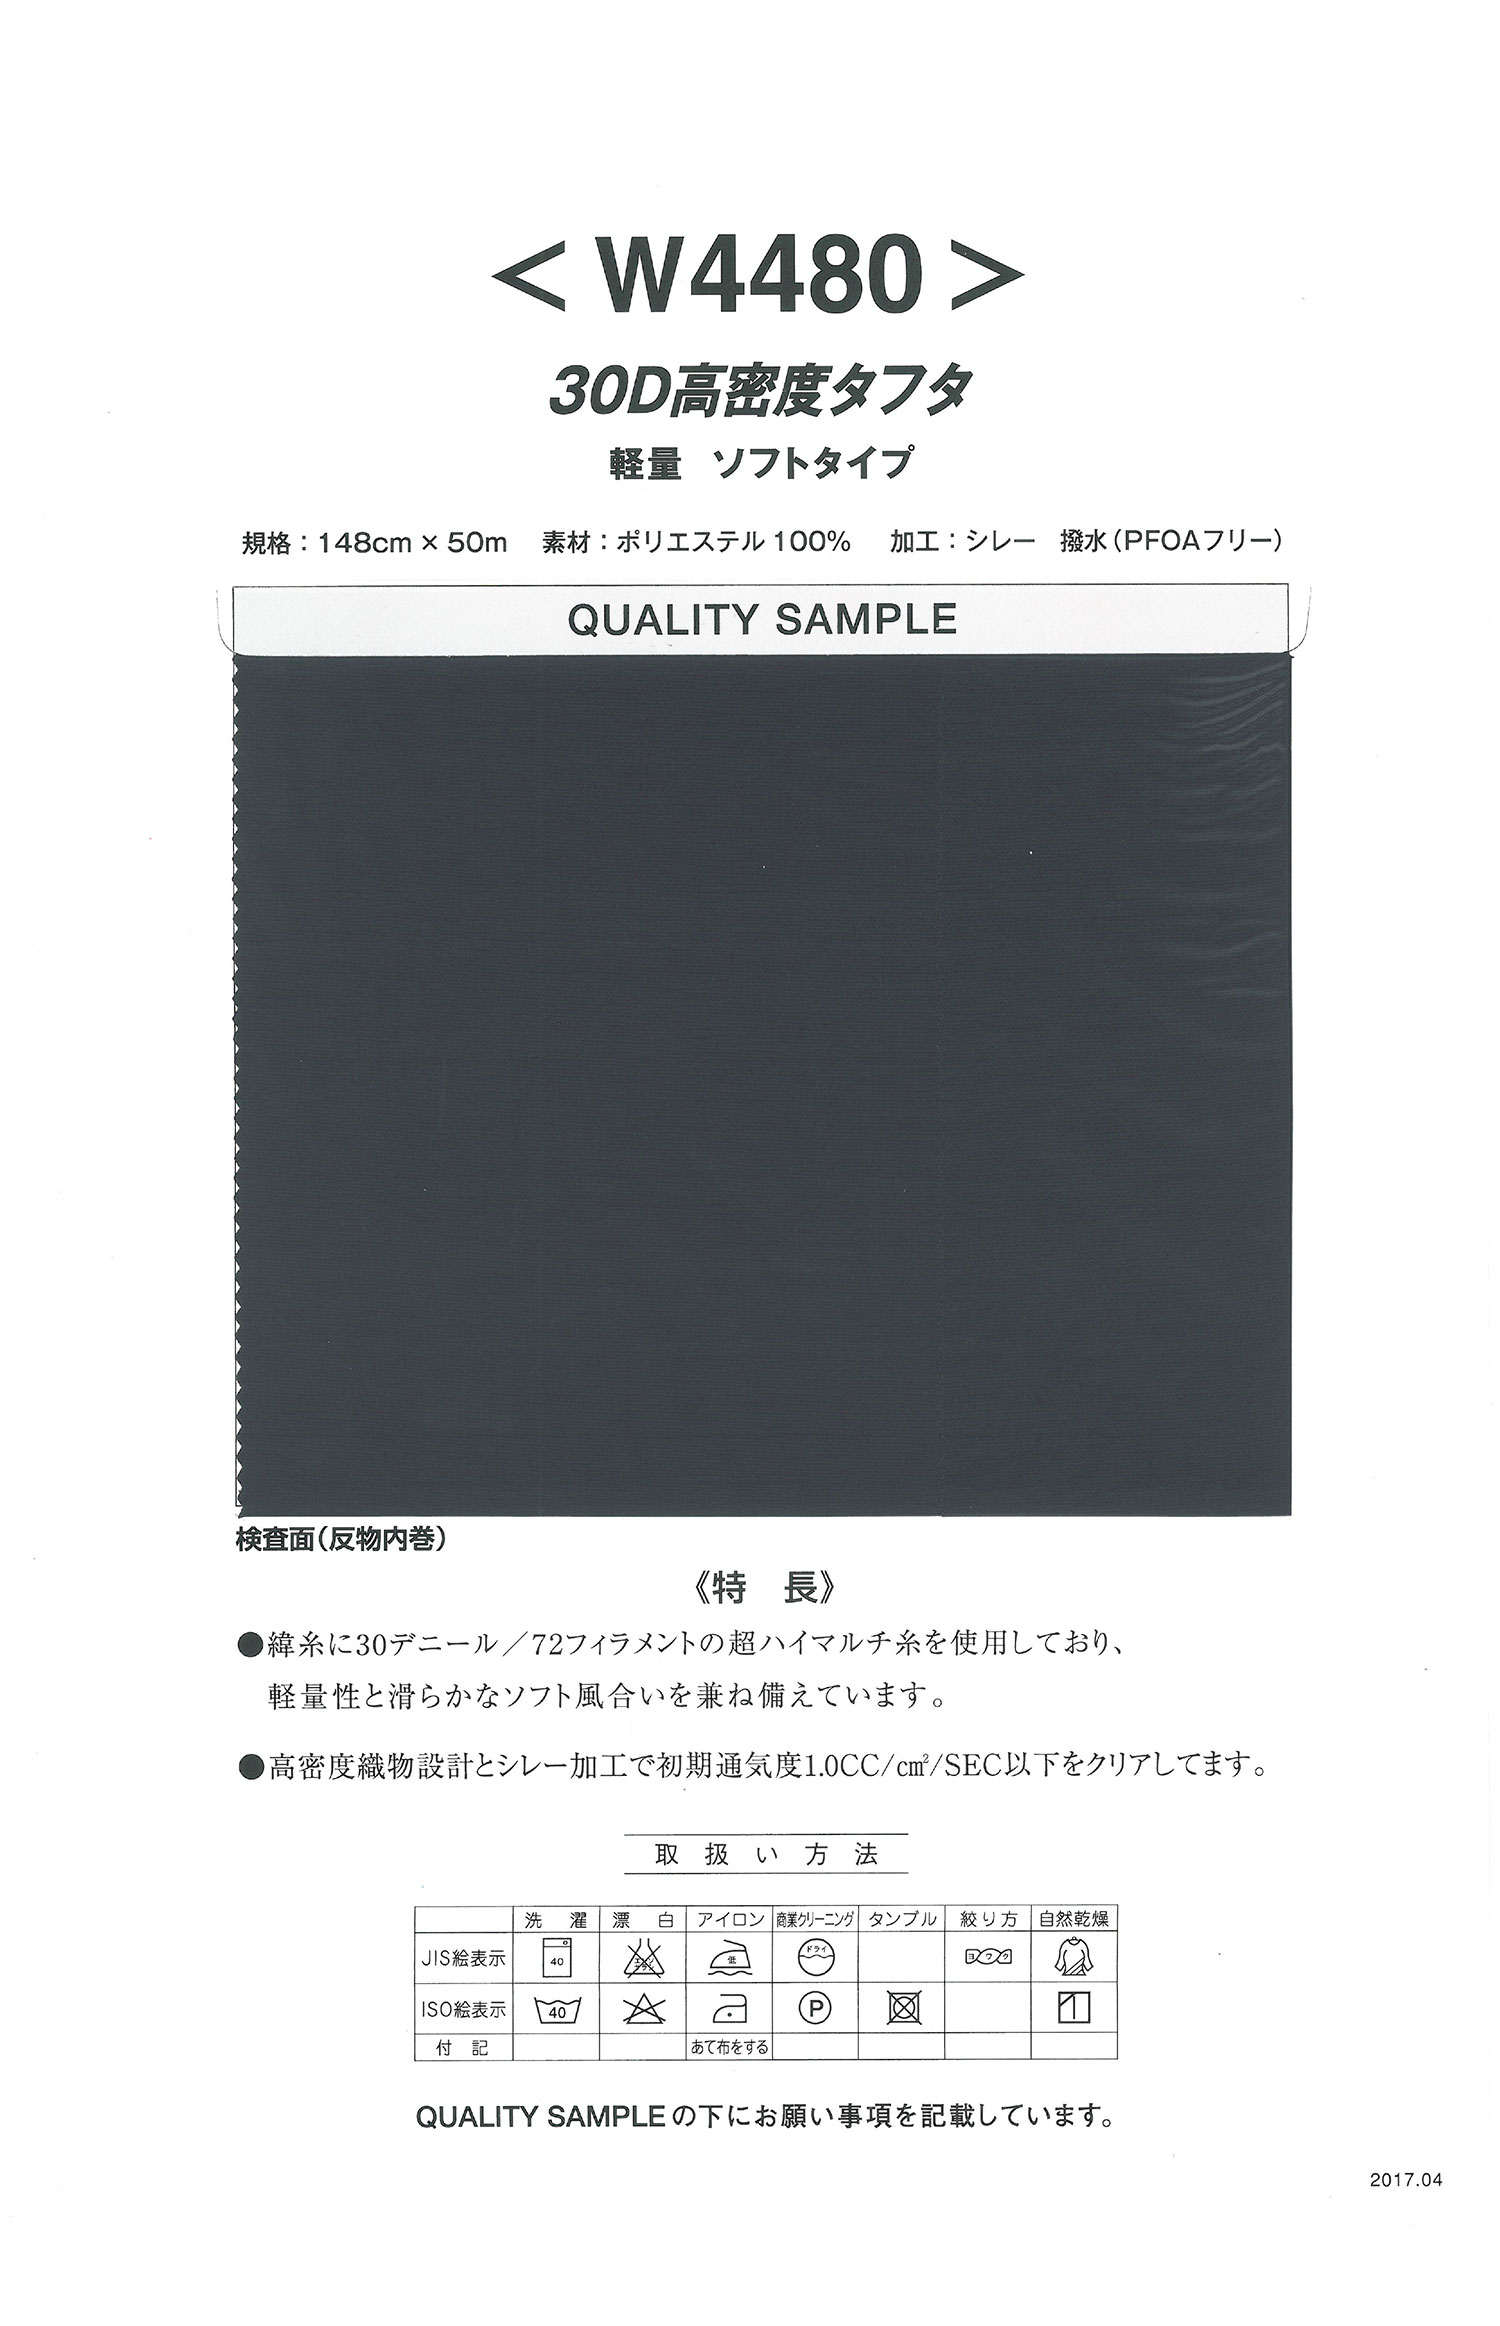 W4480 30D High Density Taffeta Lightweight Soft Type[Textile] Nishiyama